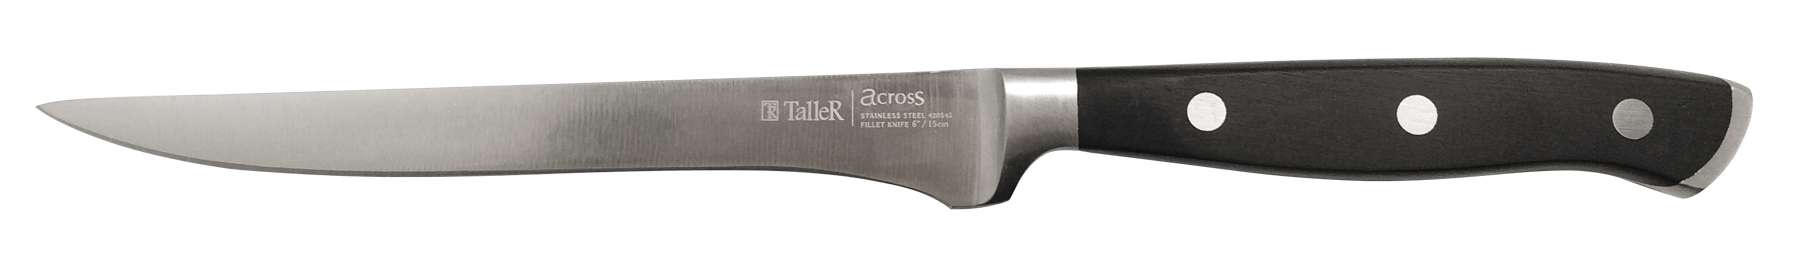 22024 TalleR Нож филейный, черный